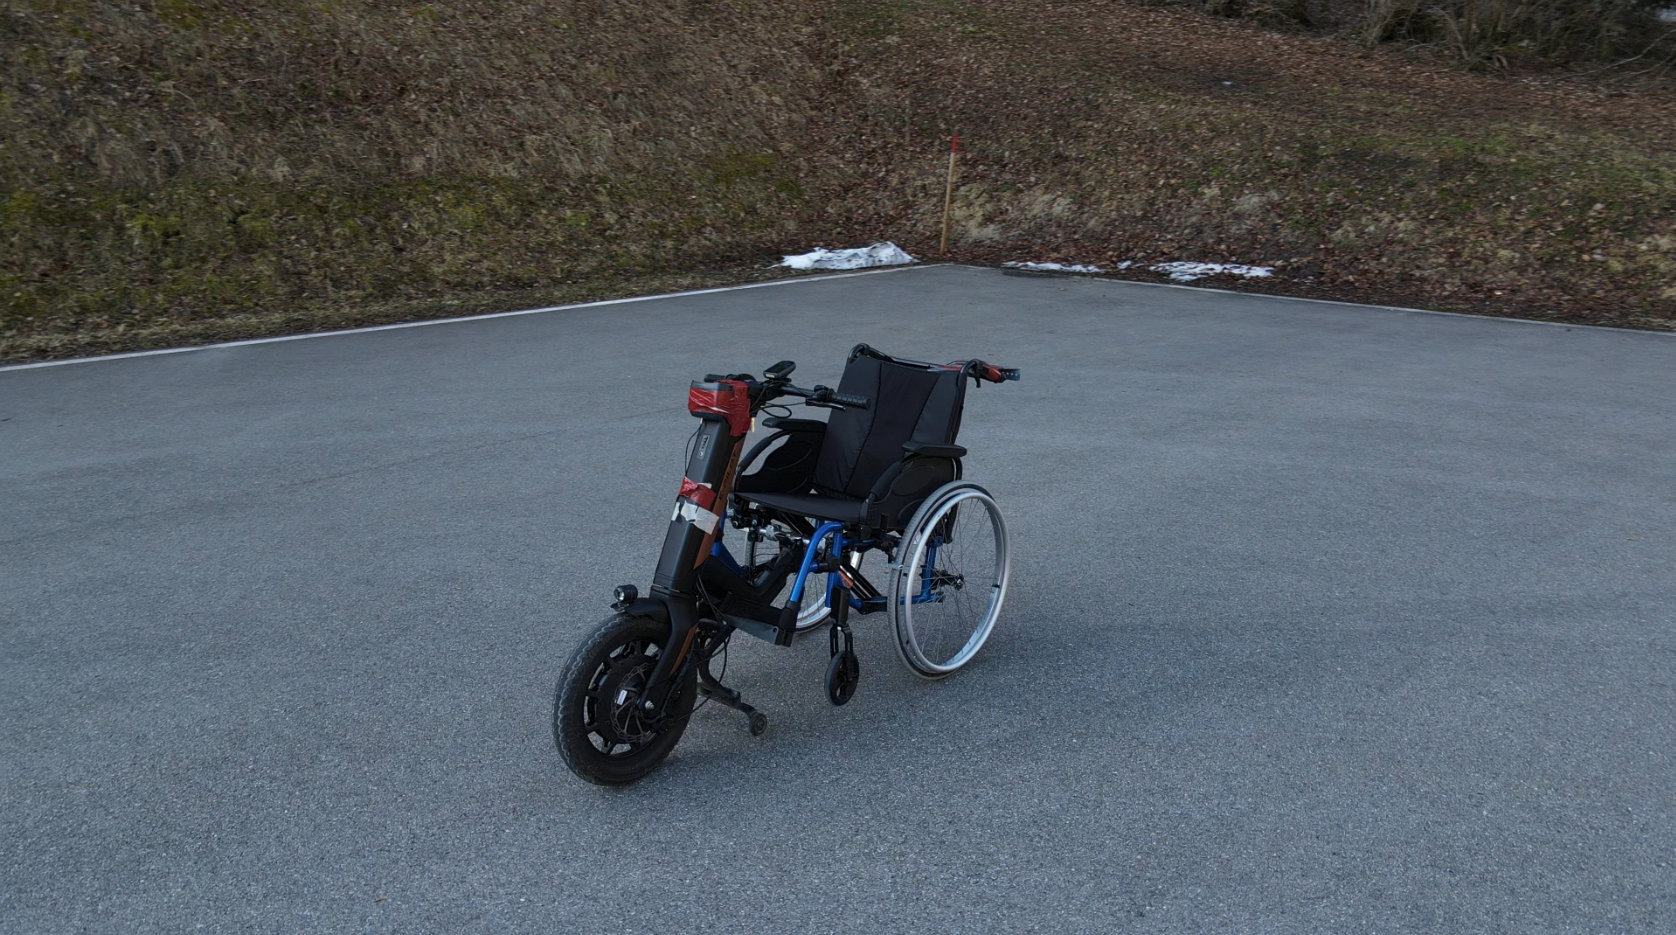 Prototype of a motorised wheelchair